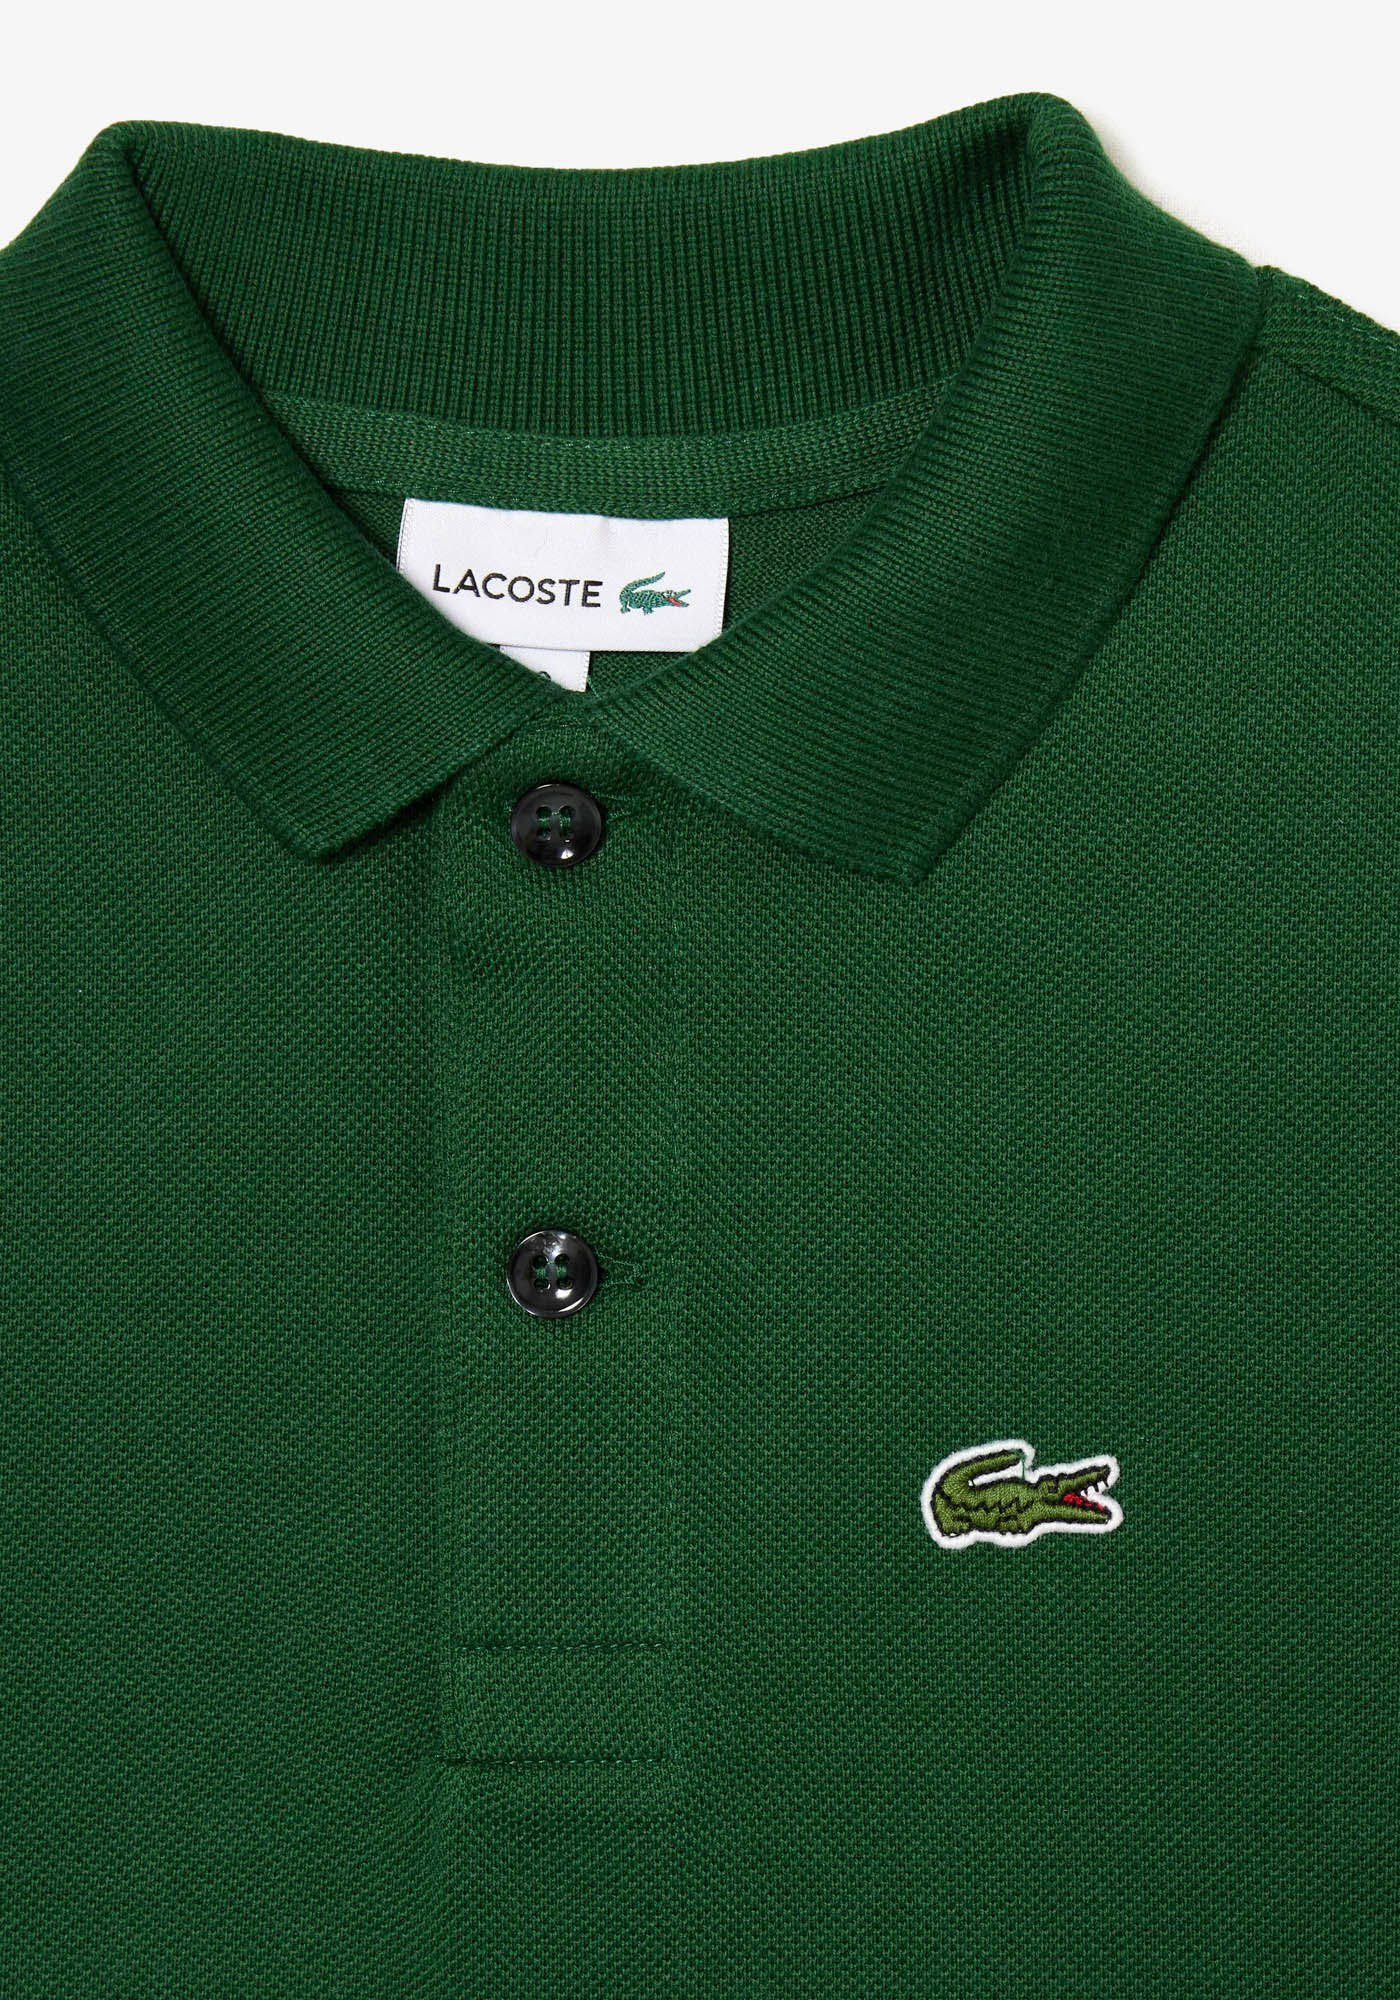 Lacoste Kids Junior grün Kids aufgesticktem Kroko MiniMe,Junior, Polo Poloshirt Kinder mit